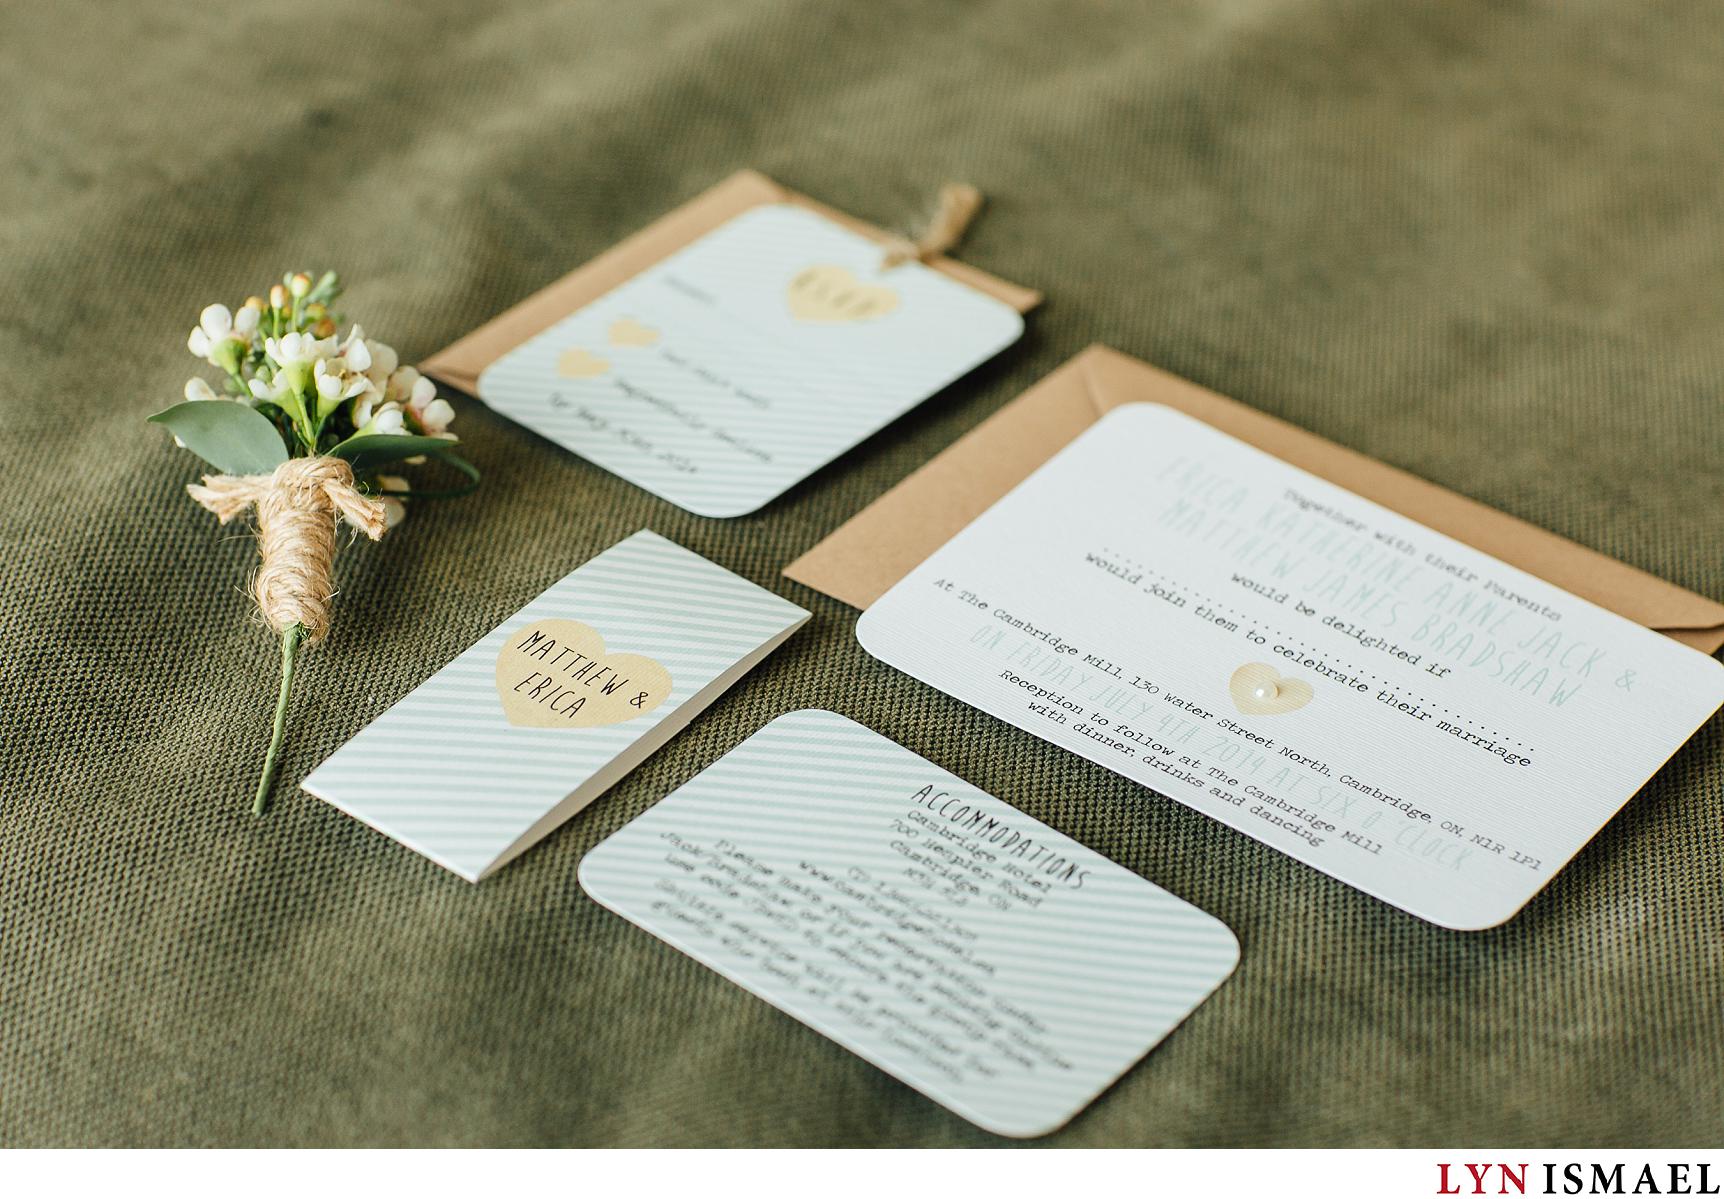 Mint and cream wedding invitations at a Waterloo Region wedding.